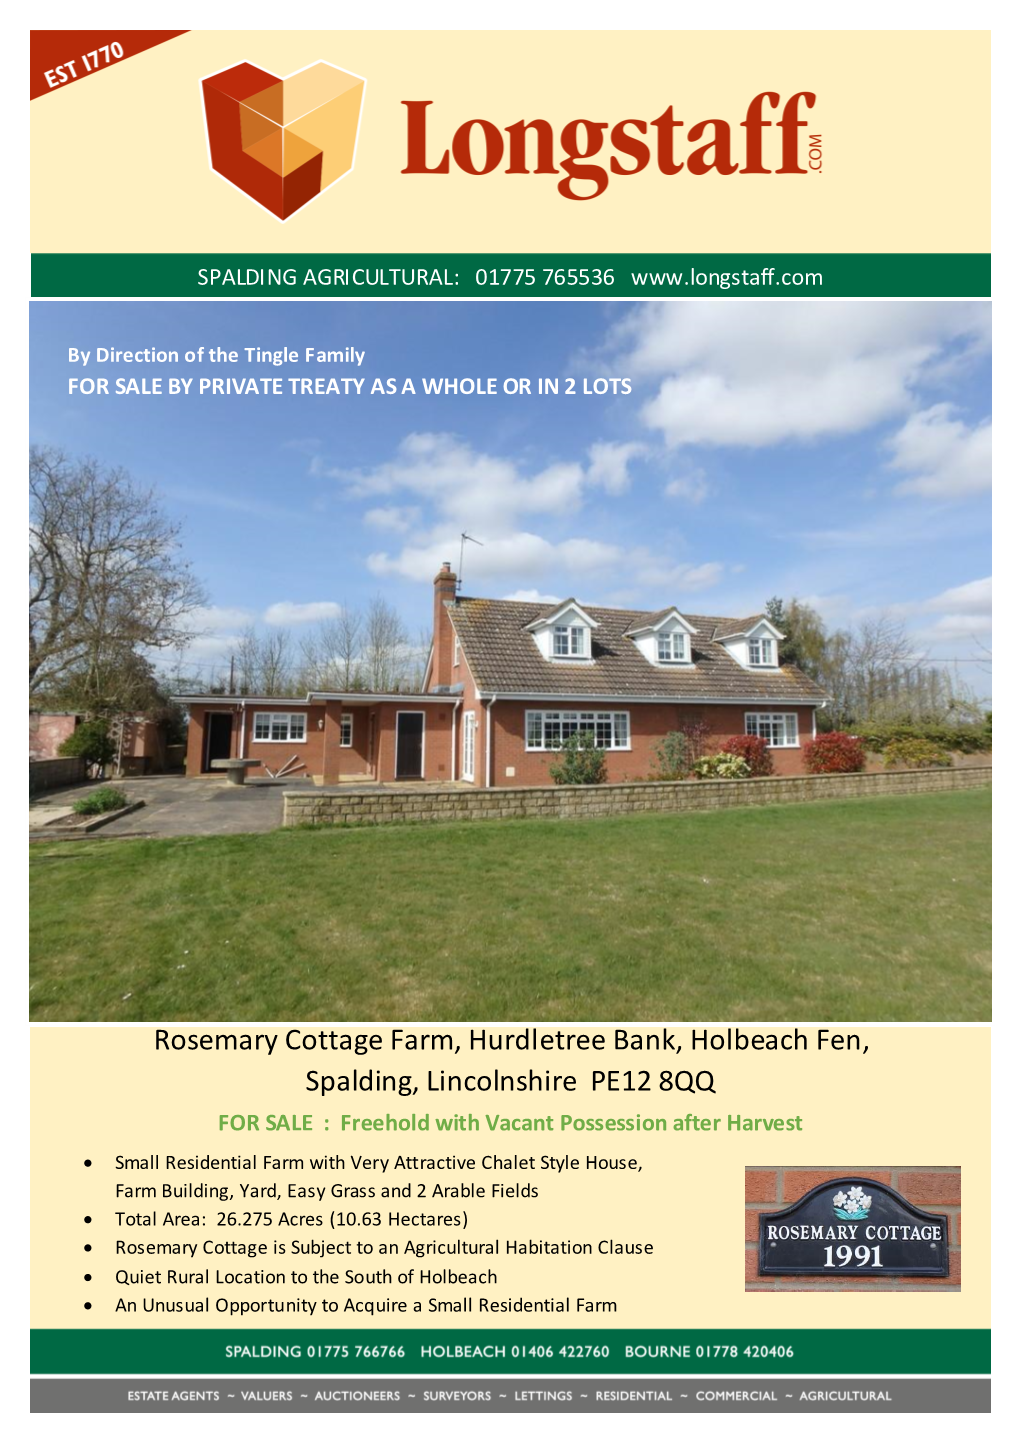 Rosemary Cottage Farm, Hurdletree Bank, Holbeach Fen, Spalding